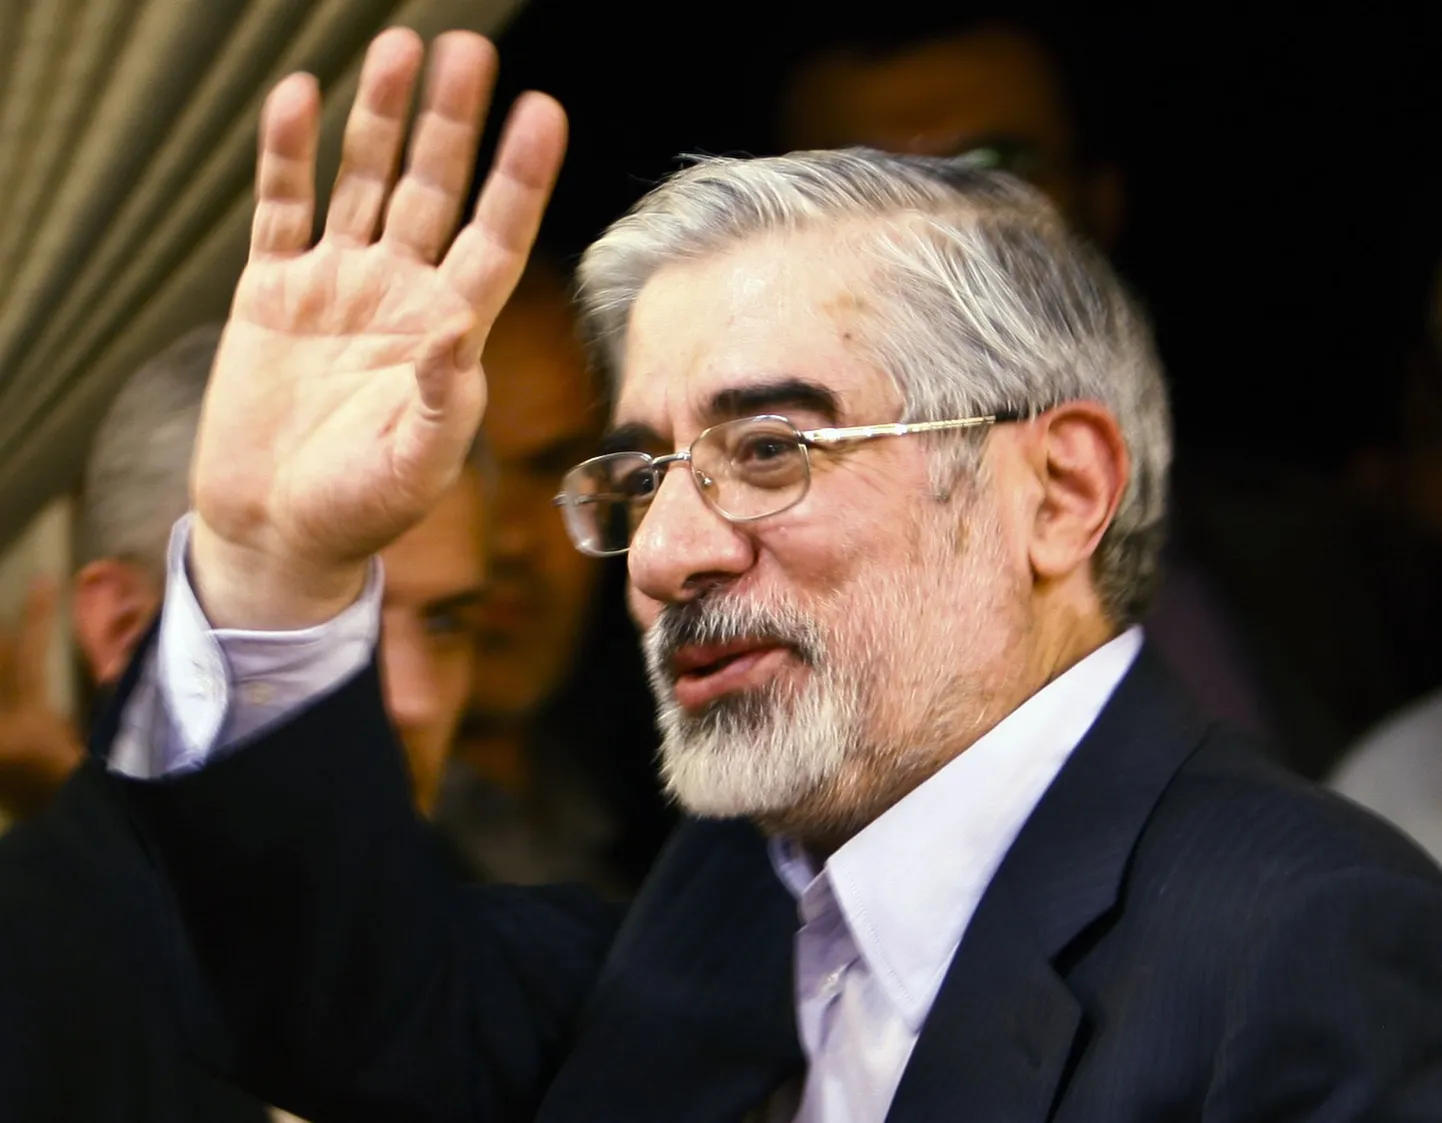 Mir Hossein Mousavi